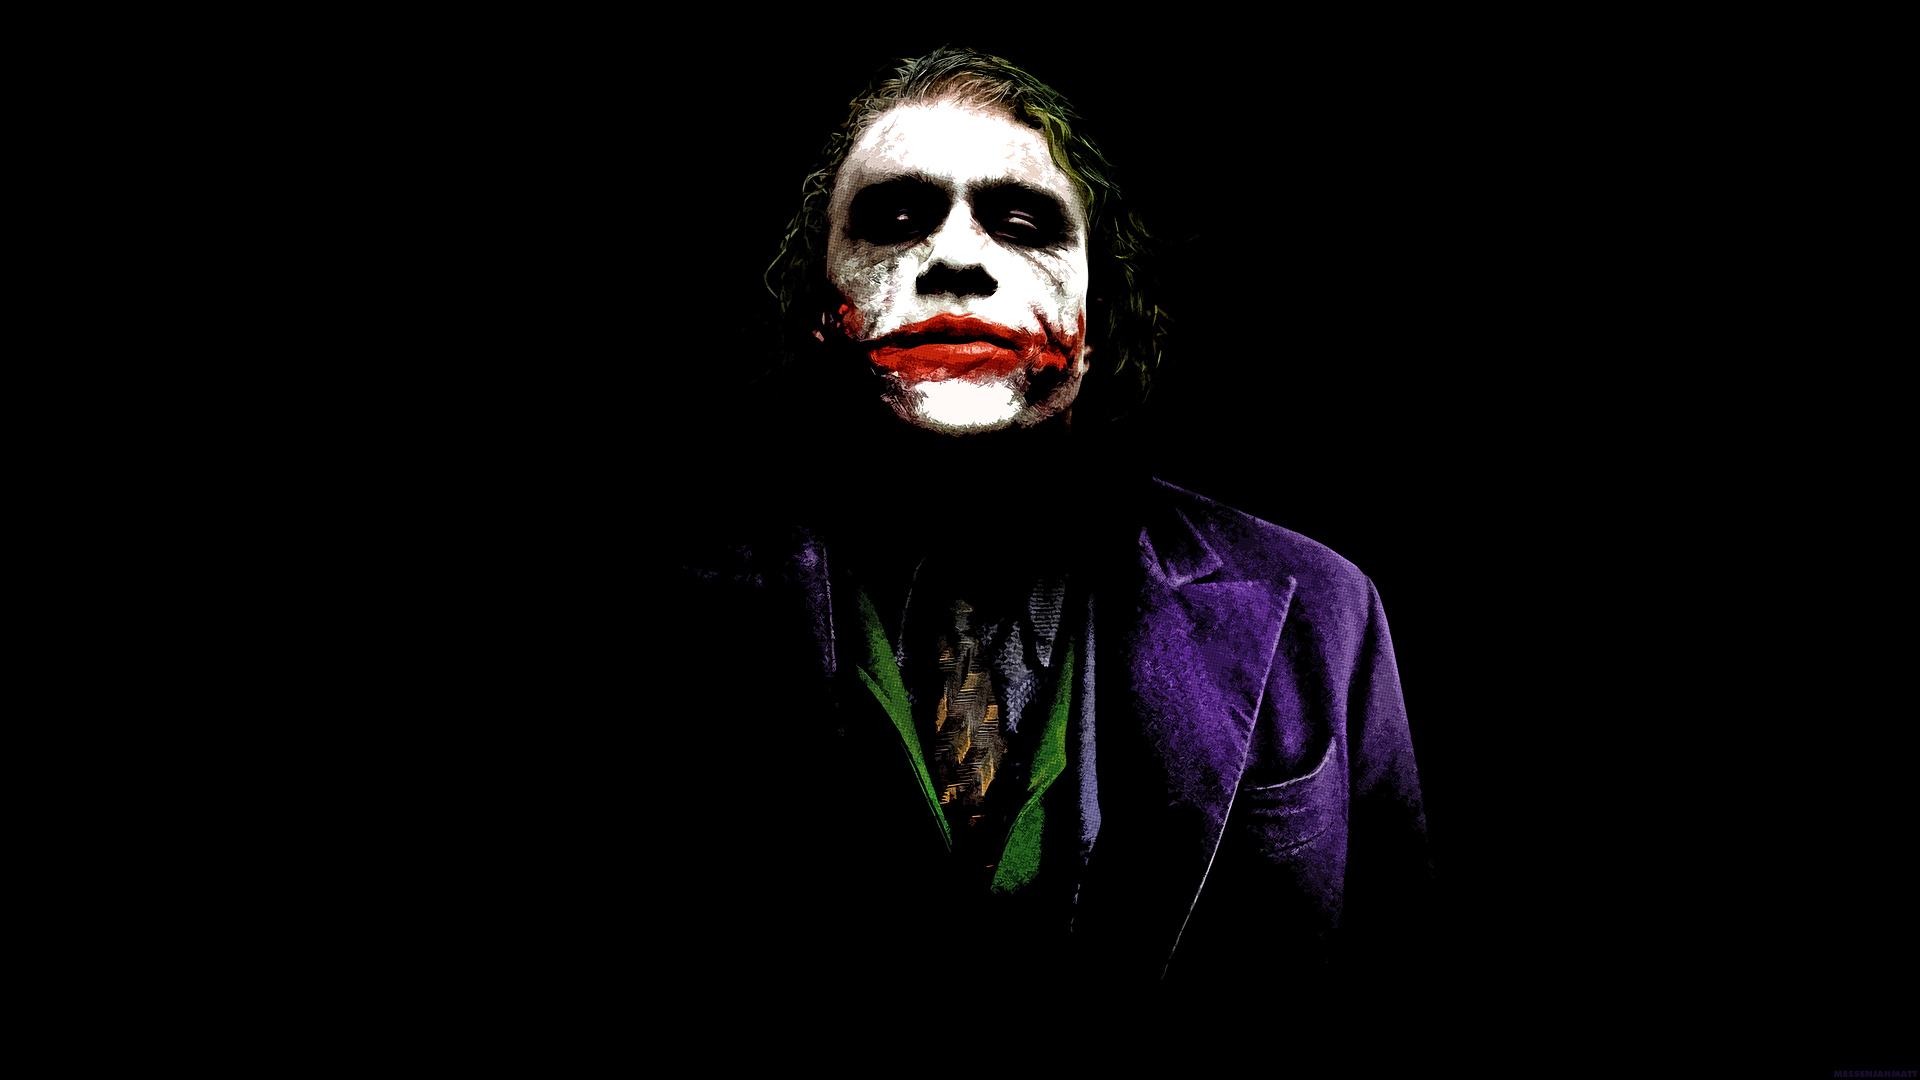 The Joker Image Wallpaper Photos